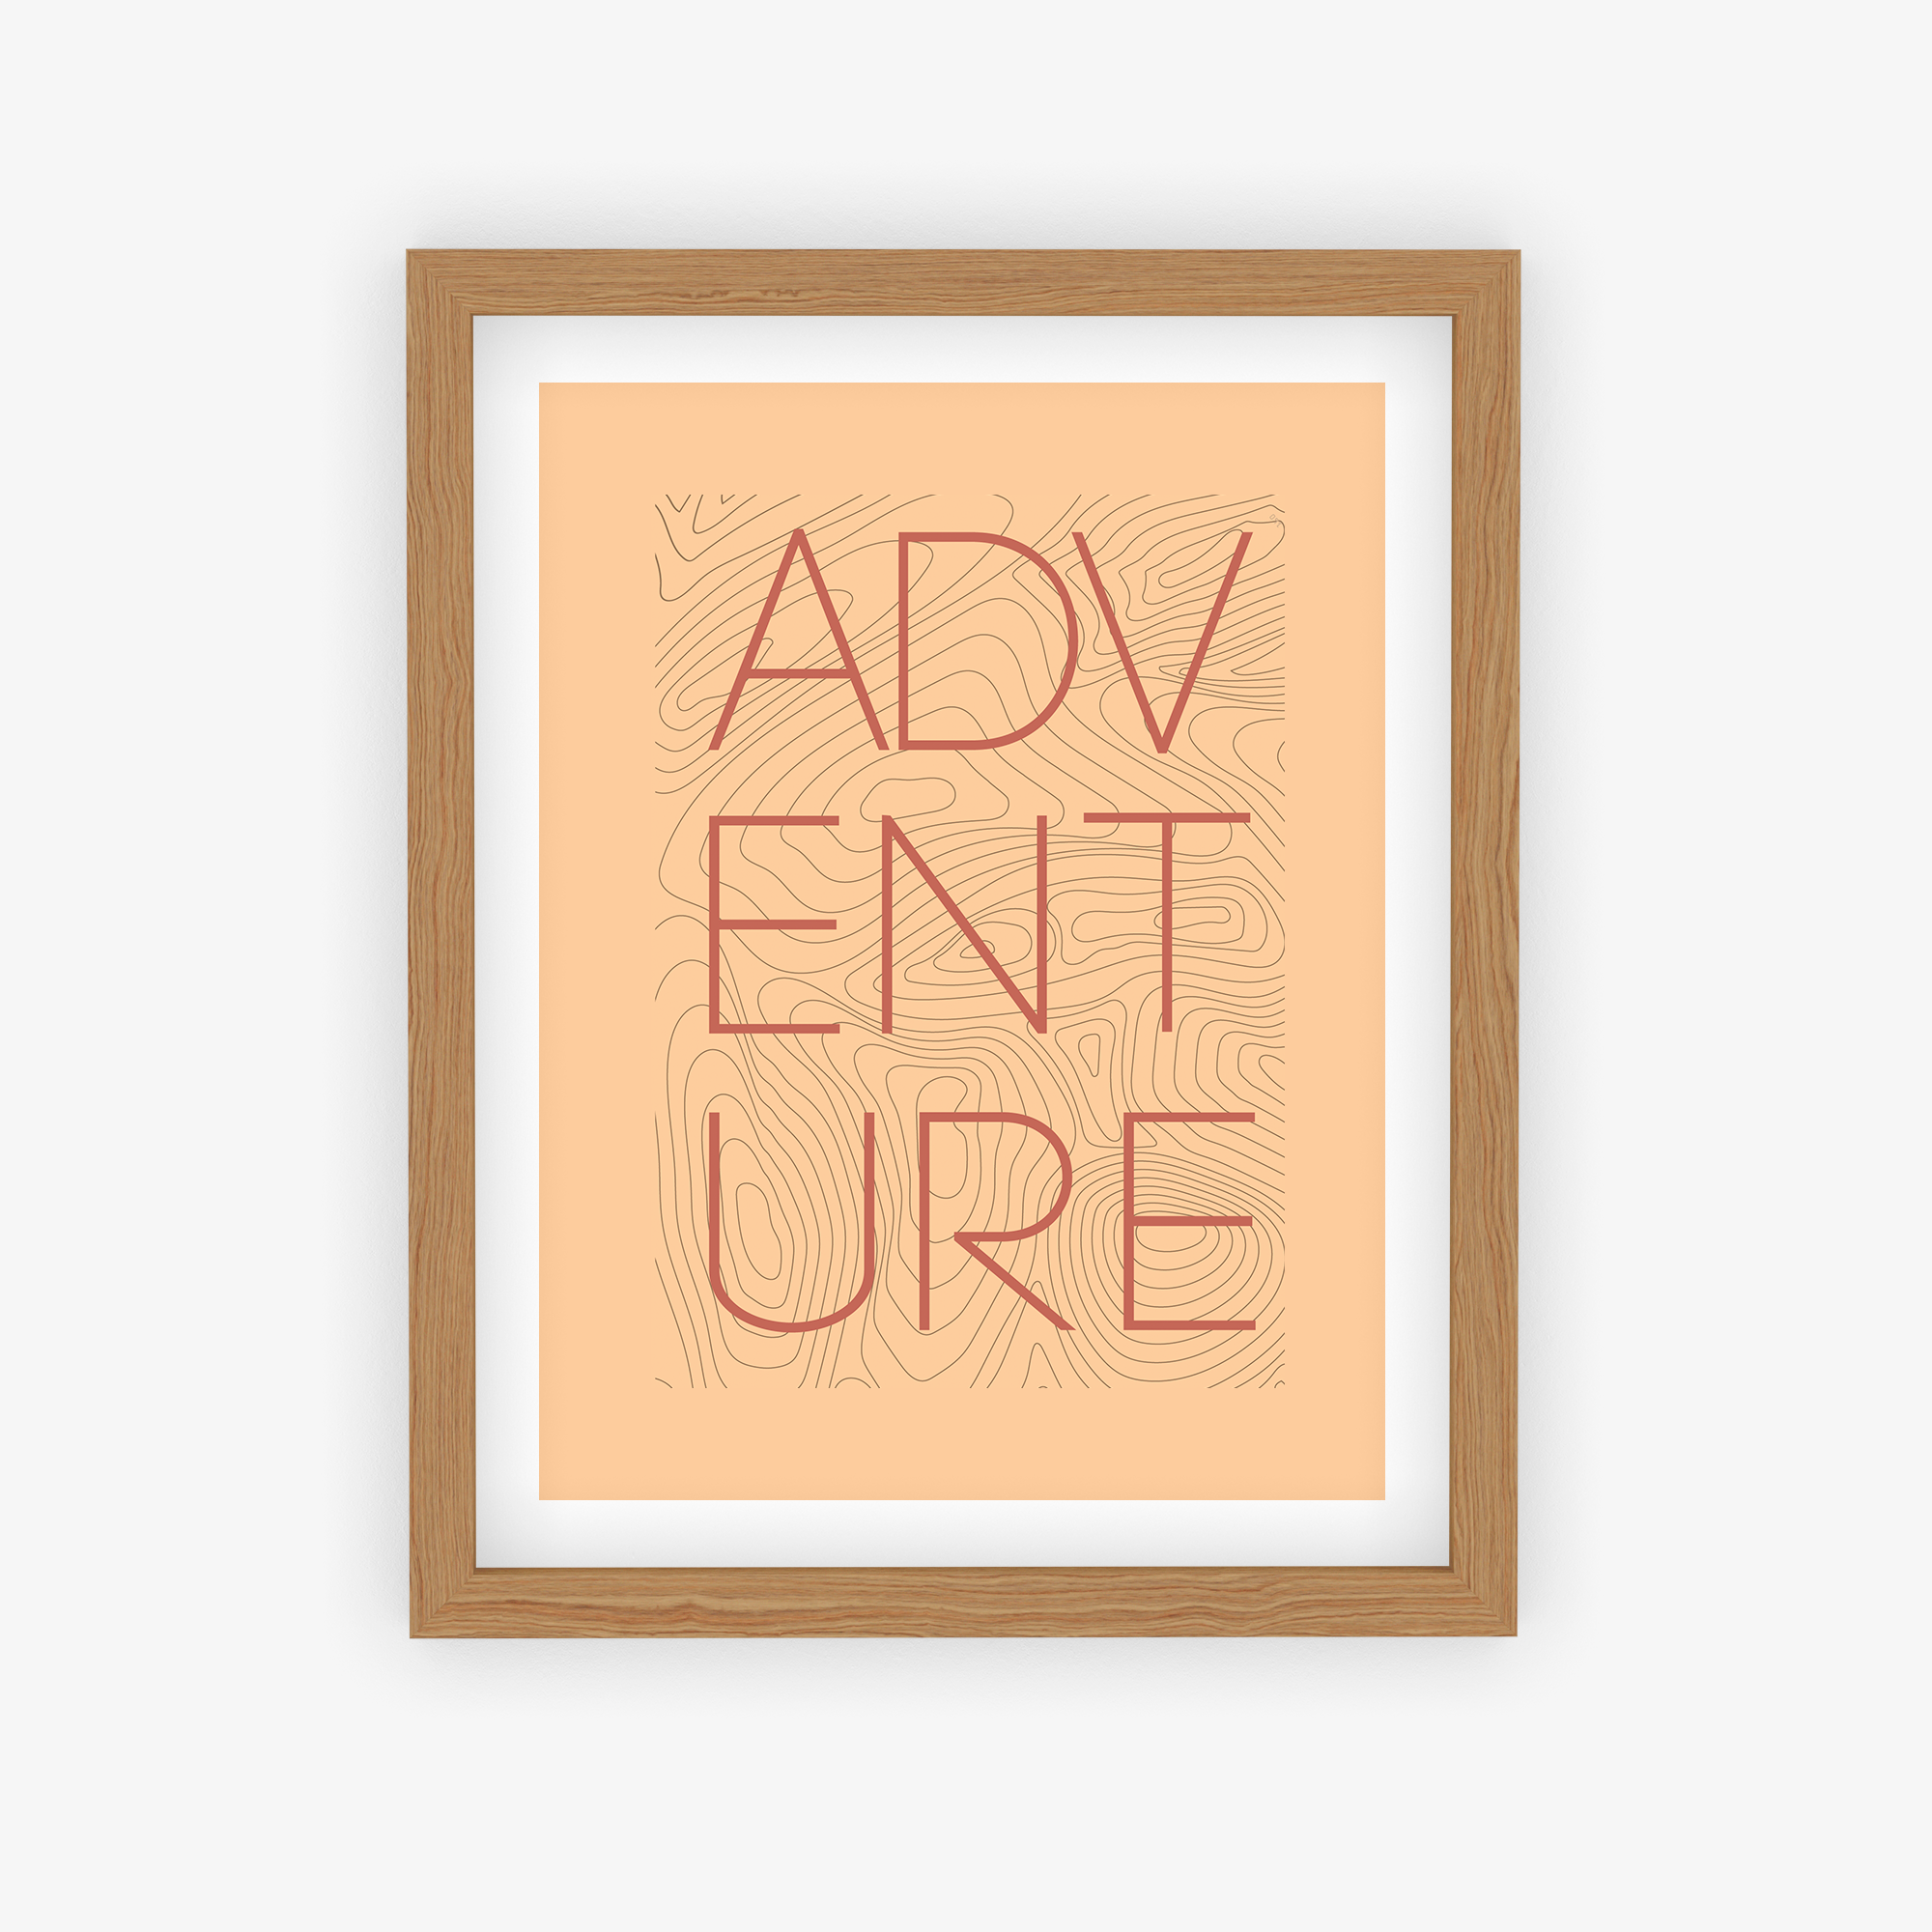 Adventure Poster